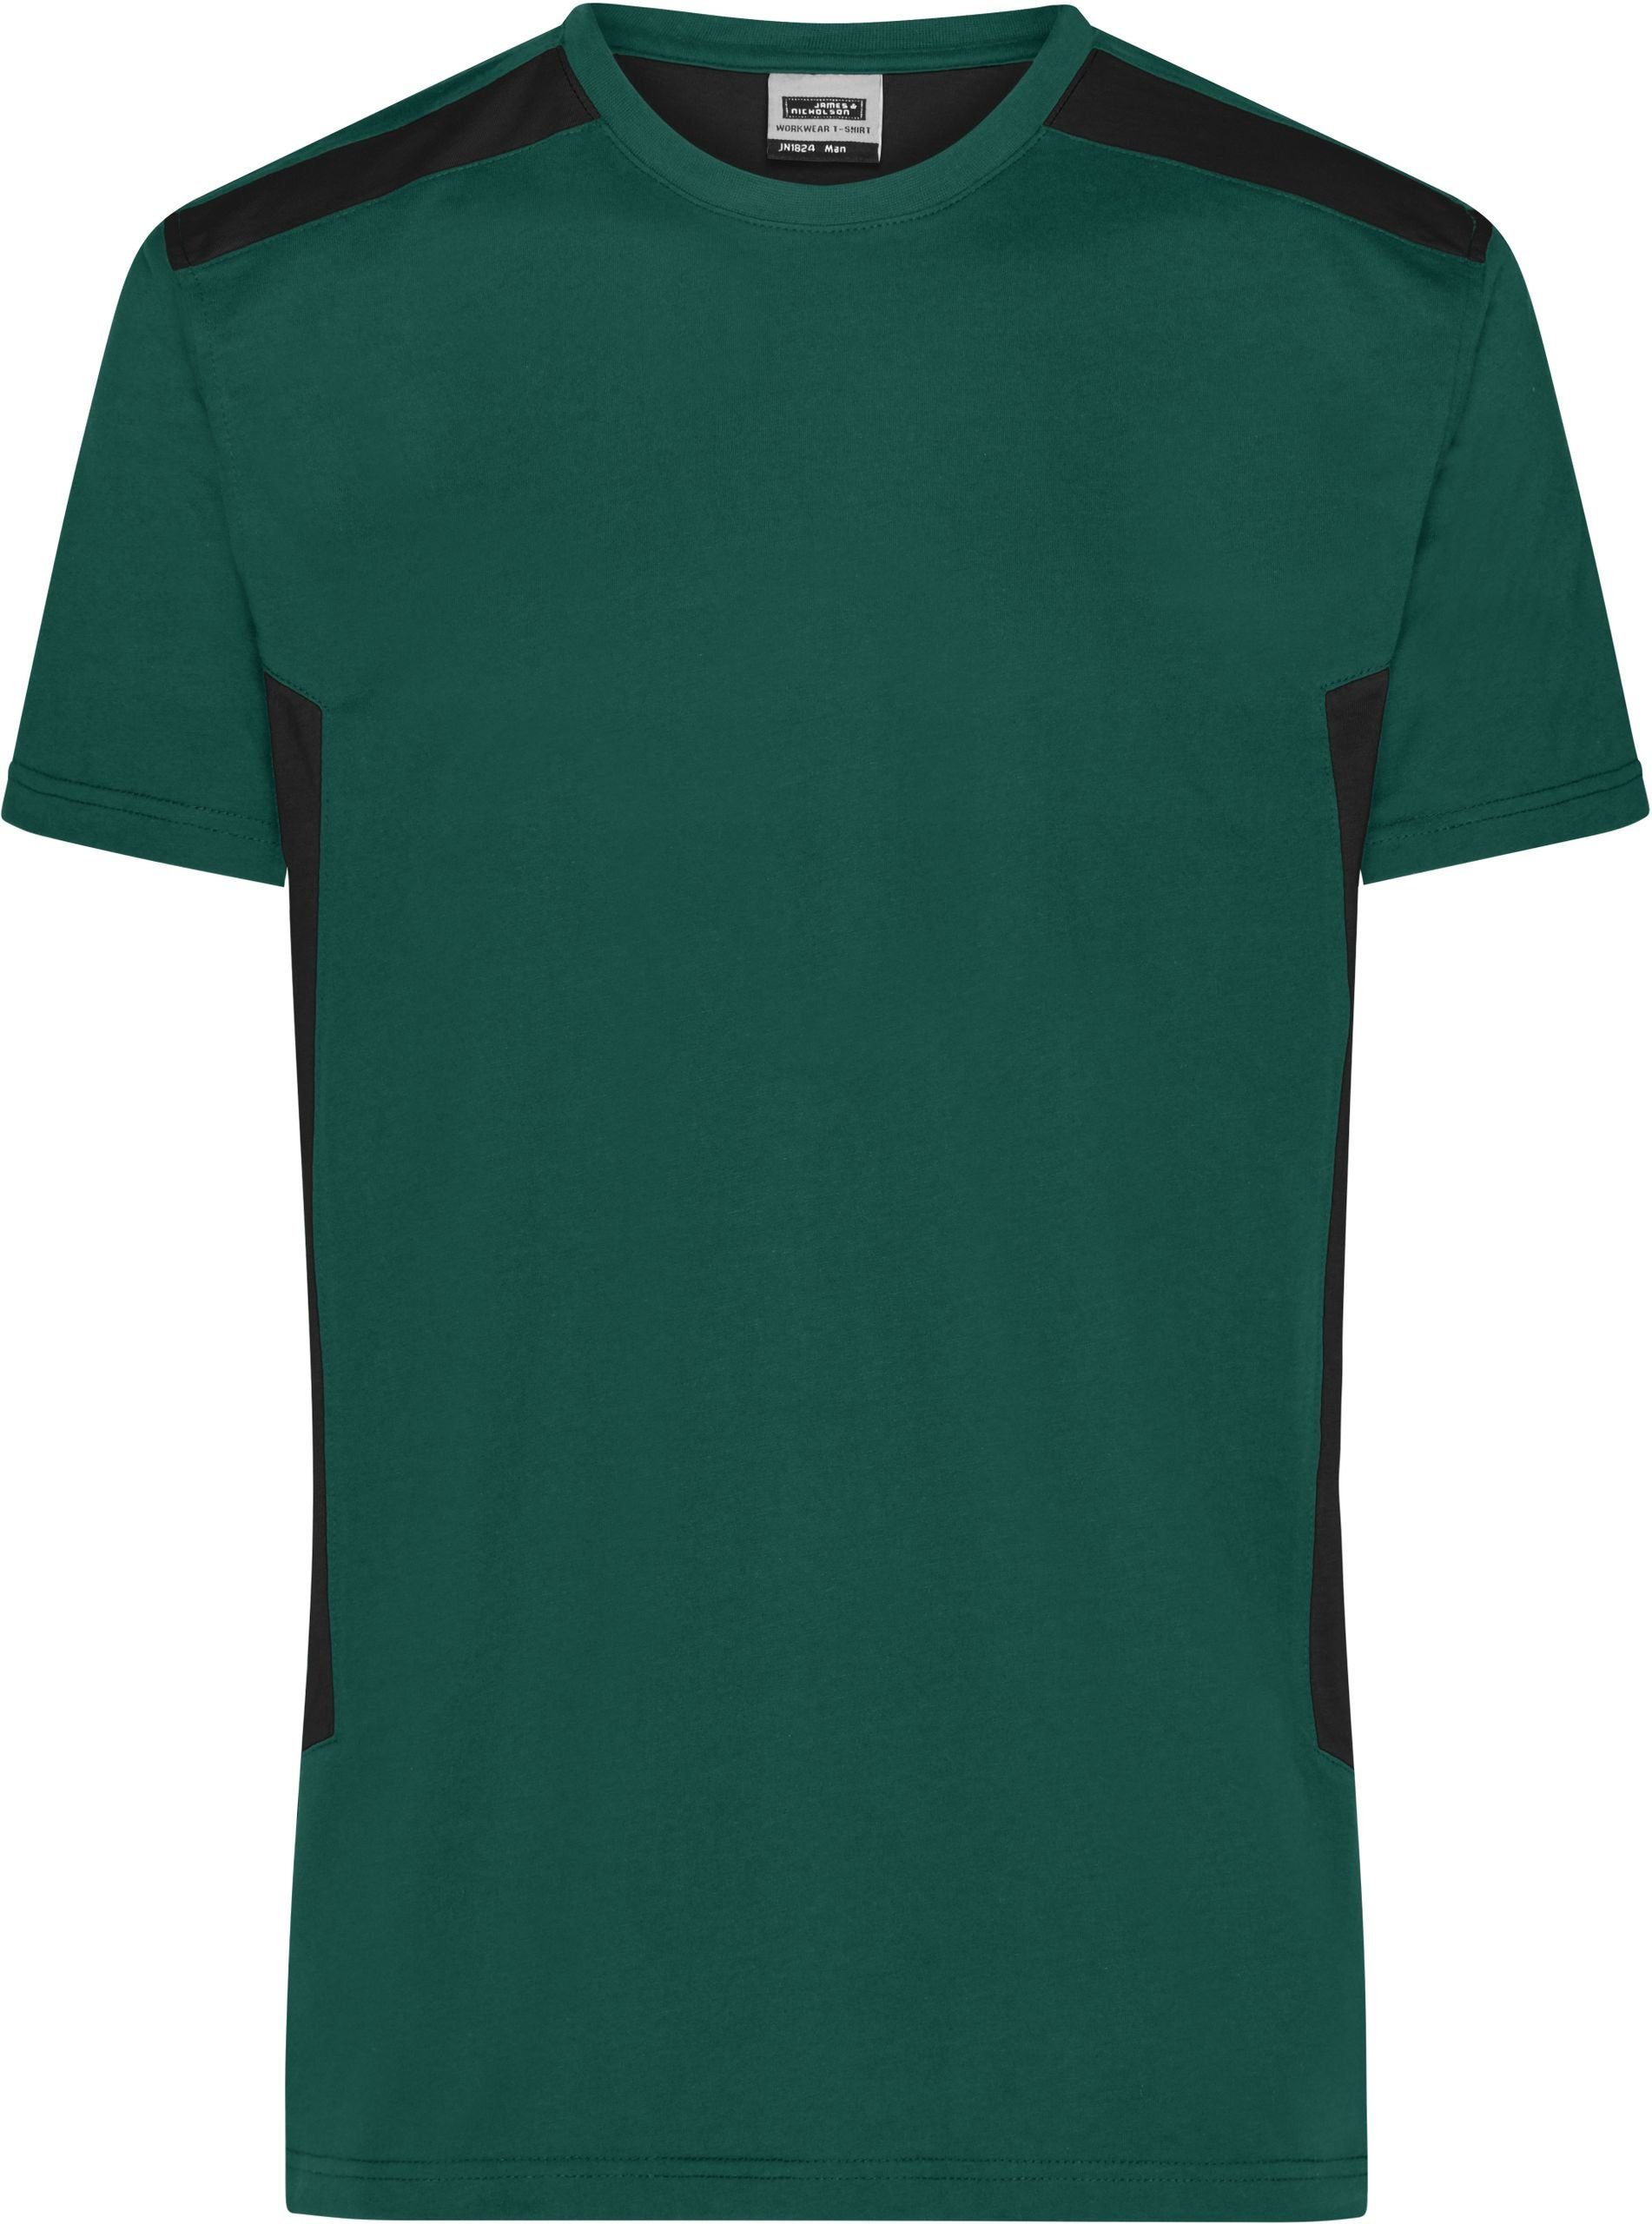 Workwear T-Shirt Nicholson Strong James Herren green/black & - dark T-Shirt